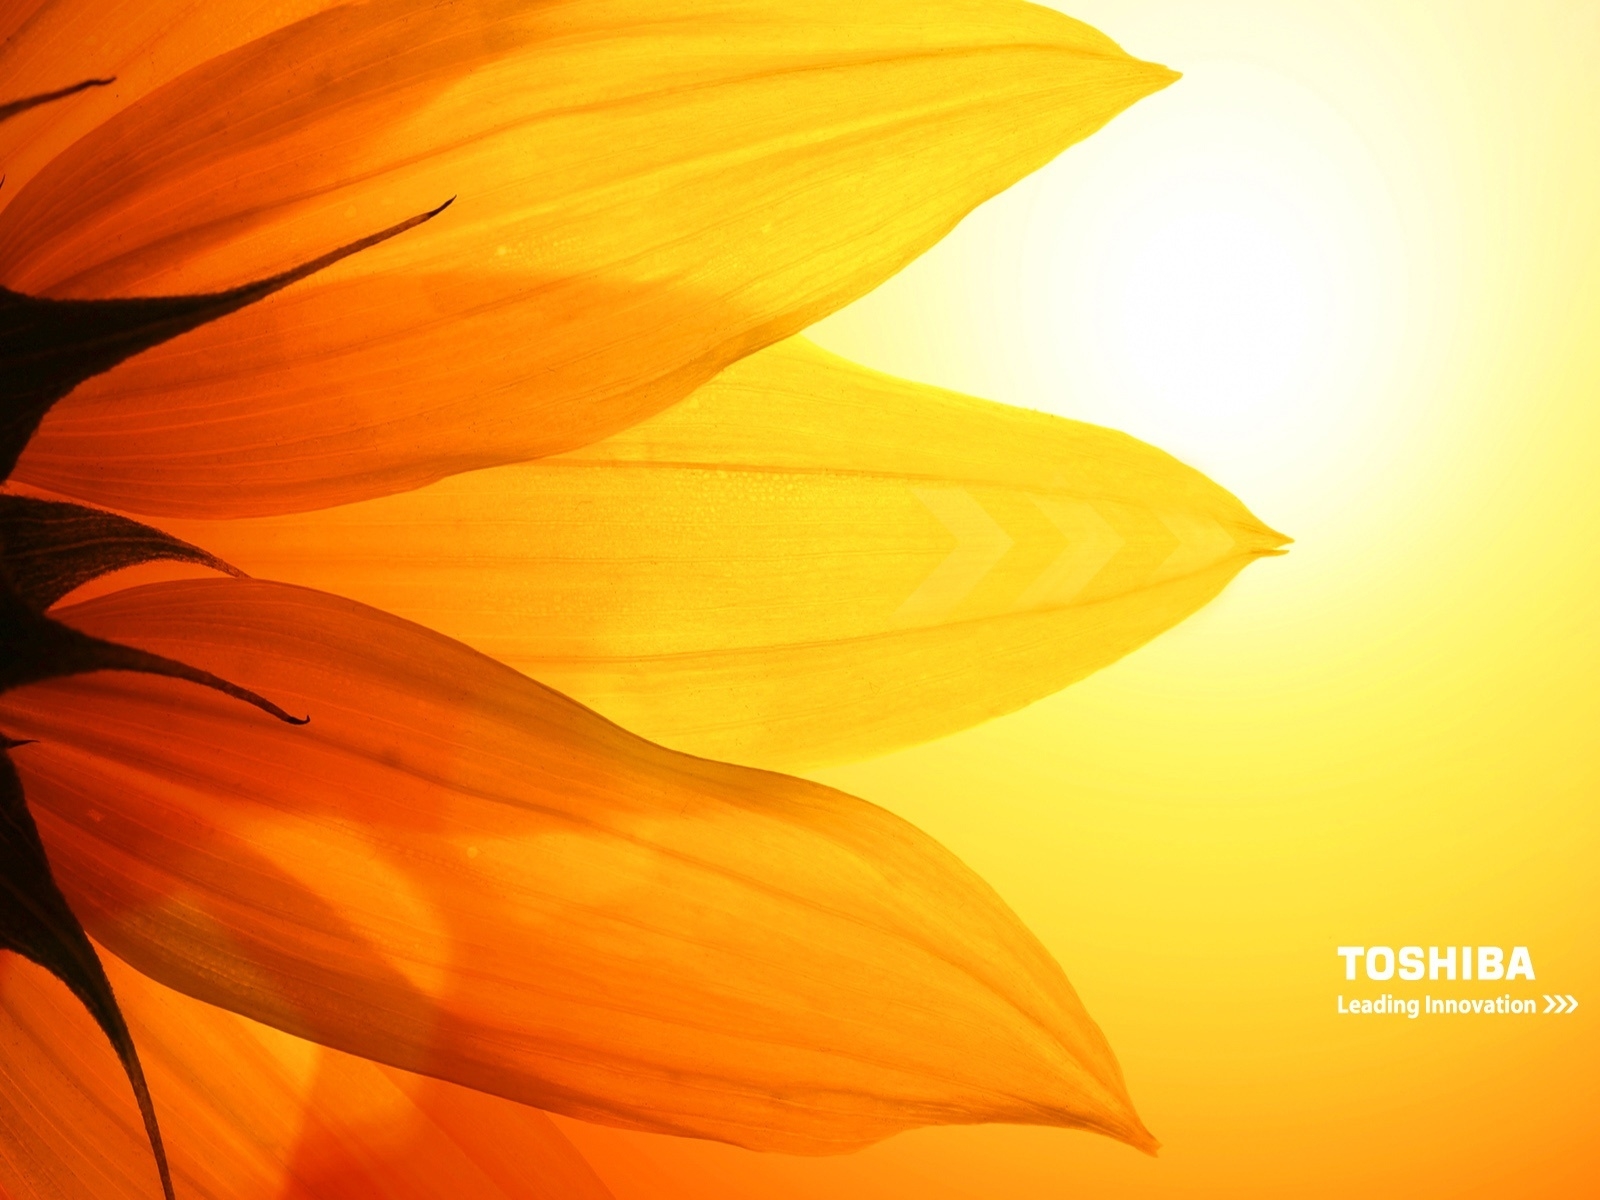 Toshiba sunflower for 1600 x 1200 resolution